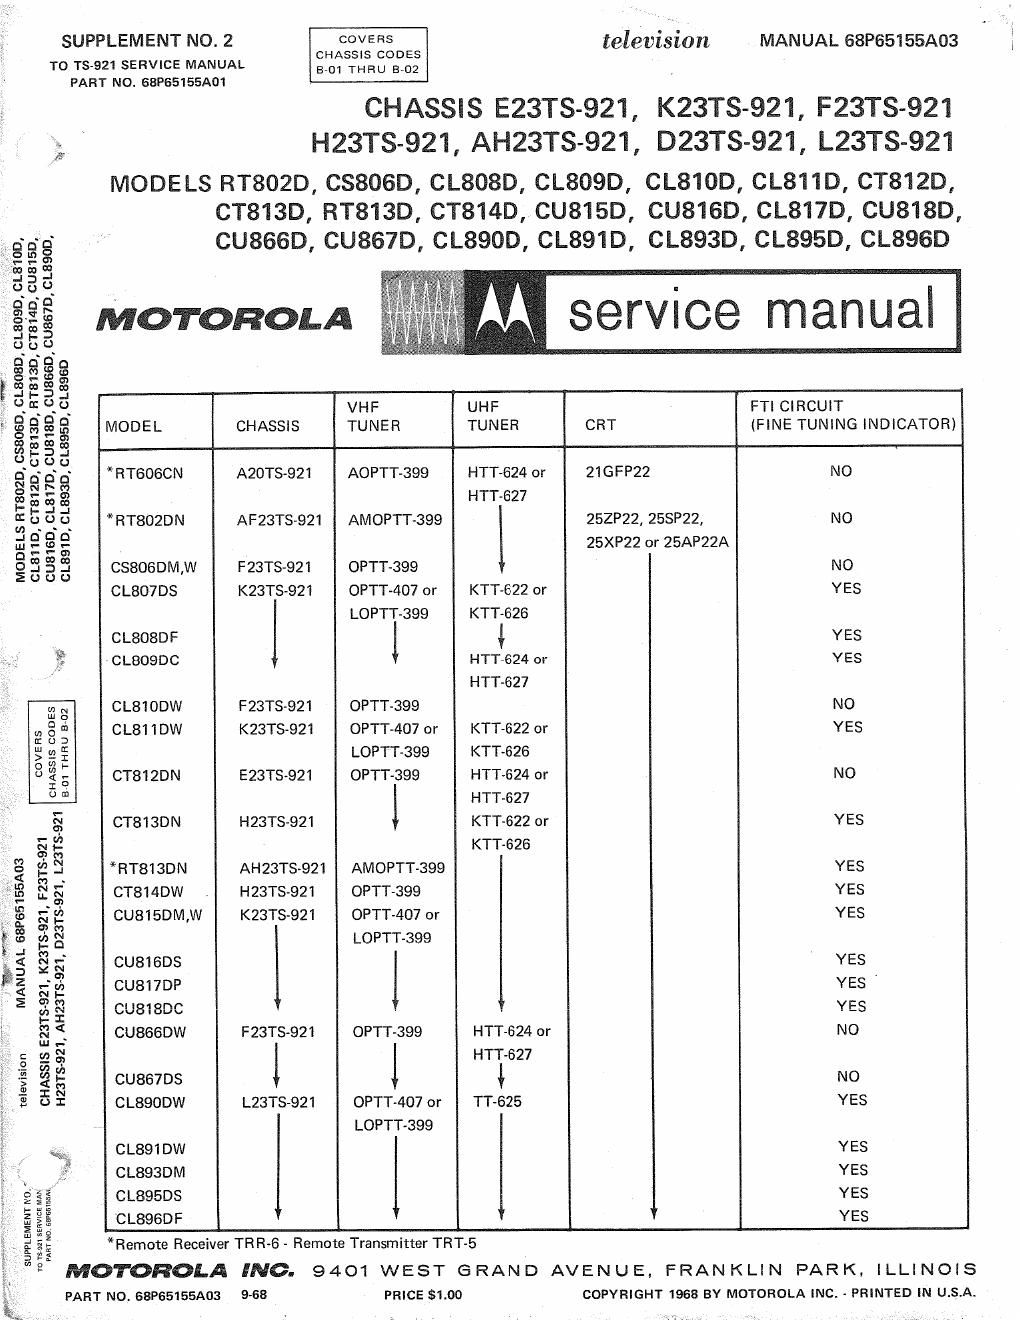 motorola ct 814 d service manual